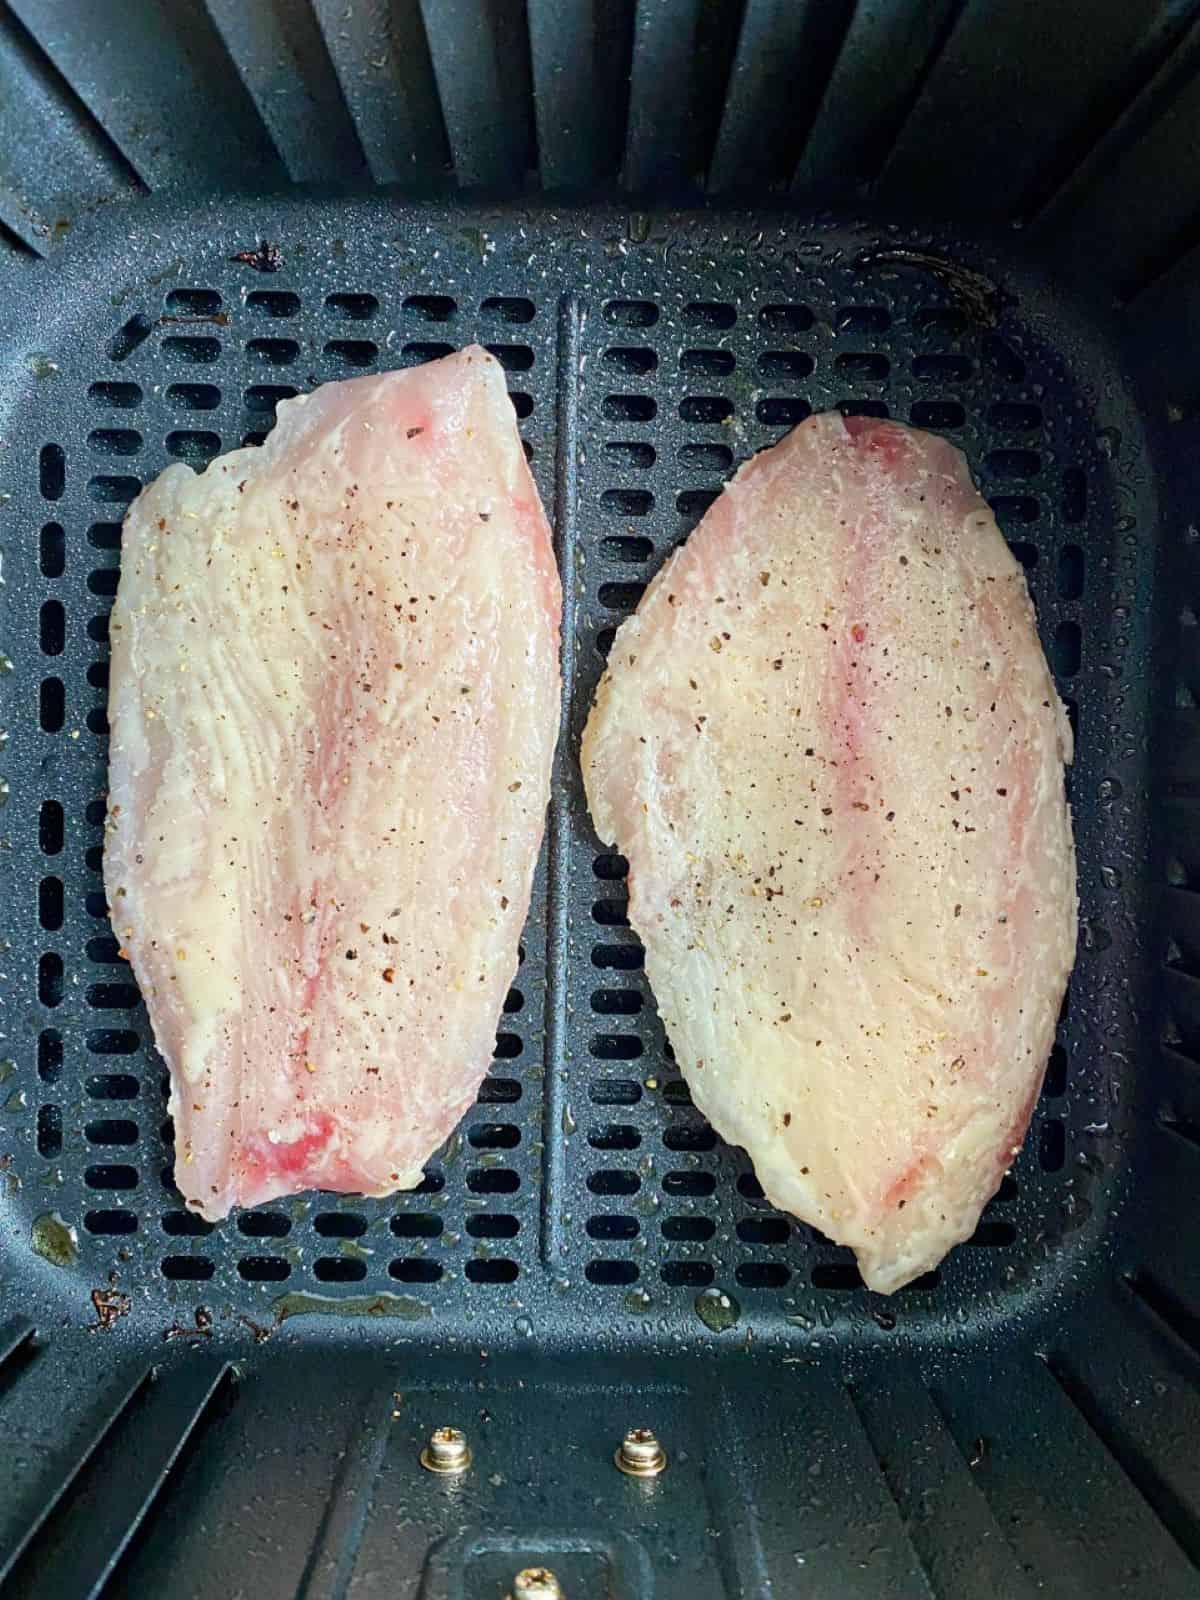 Frozen fish in an air fryer basket seasoned with salt, pepper, and butter.